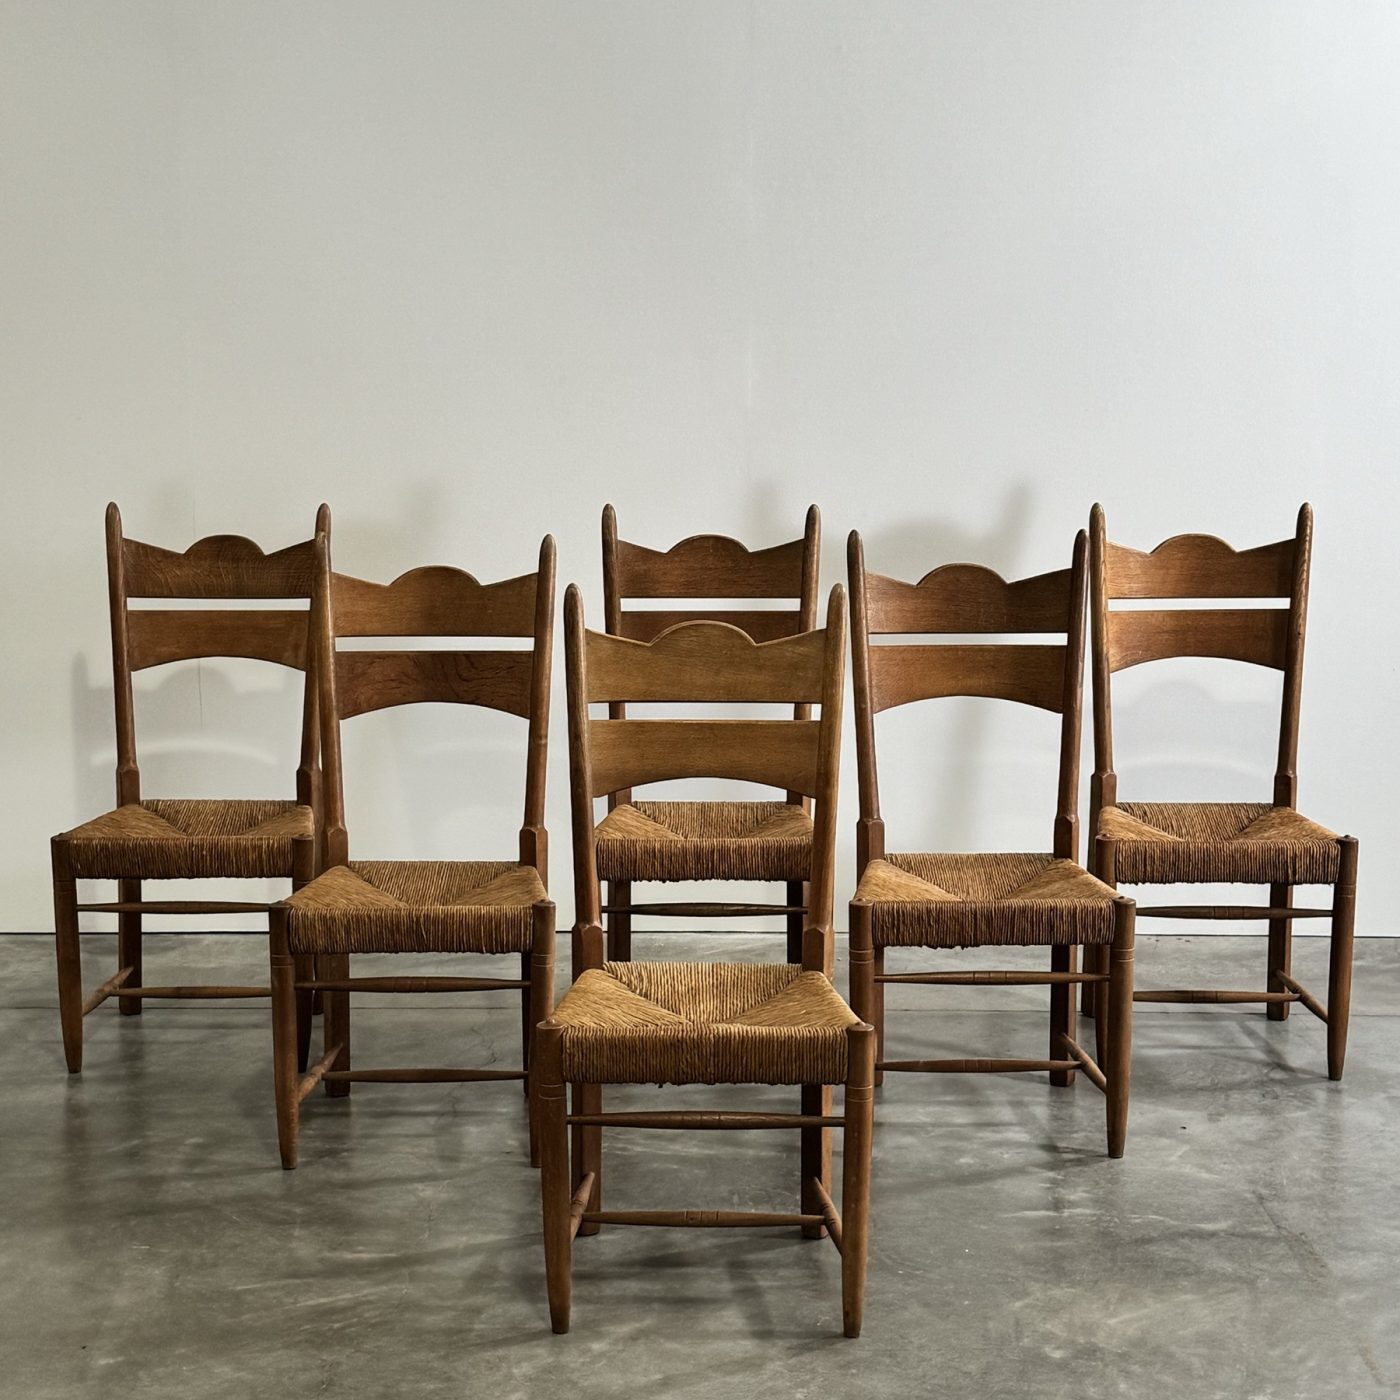 objet-vagabond-rustic-chairs0004